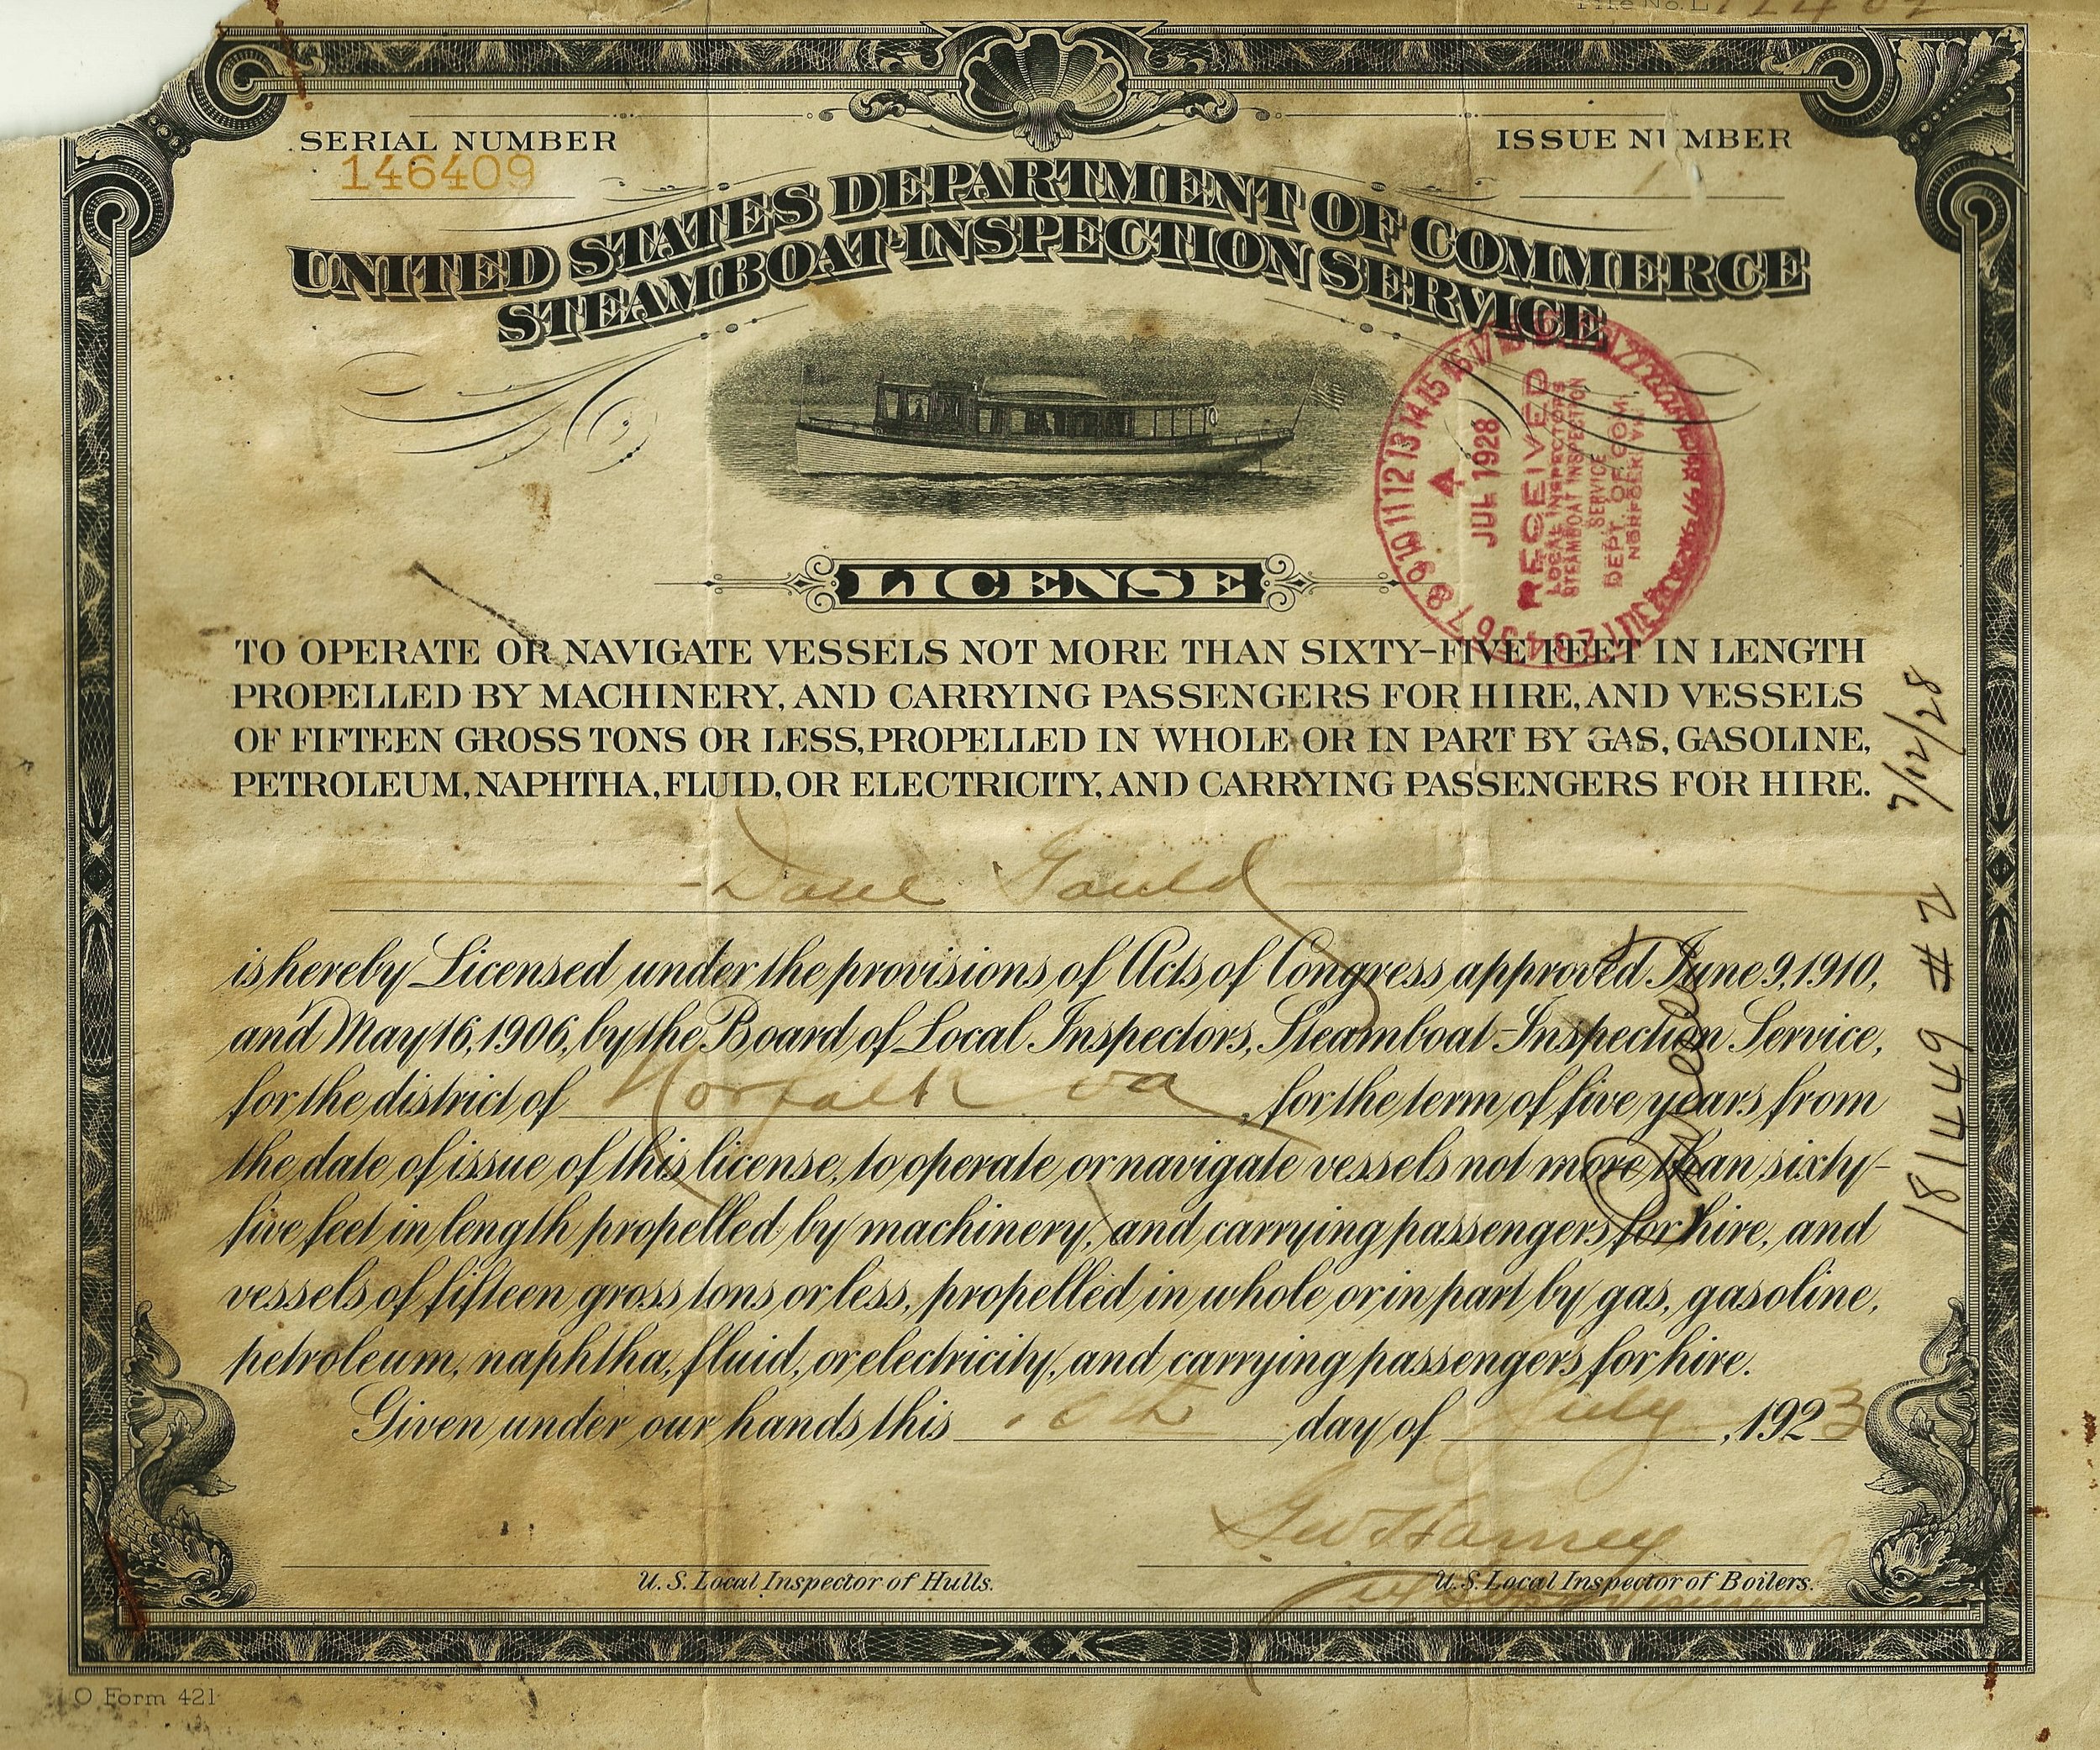 Capt. Dave's 1922 license